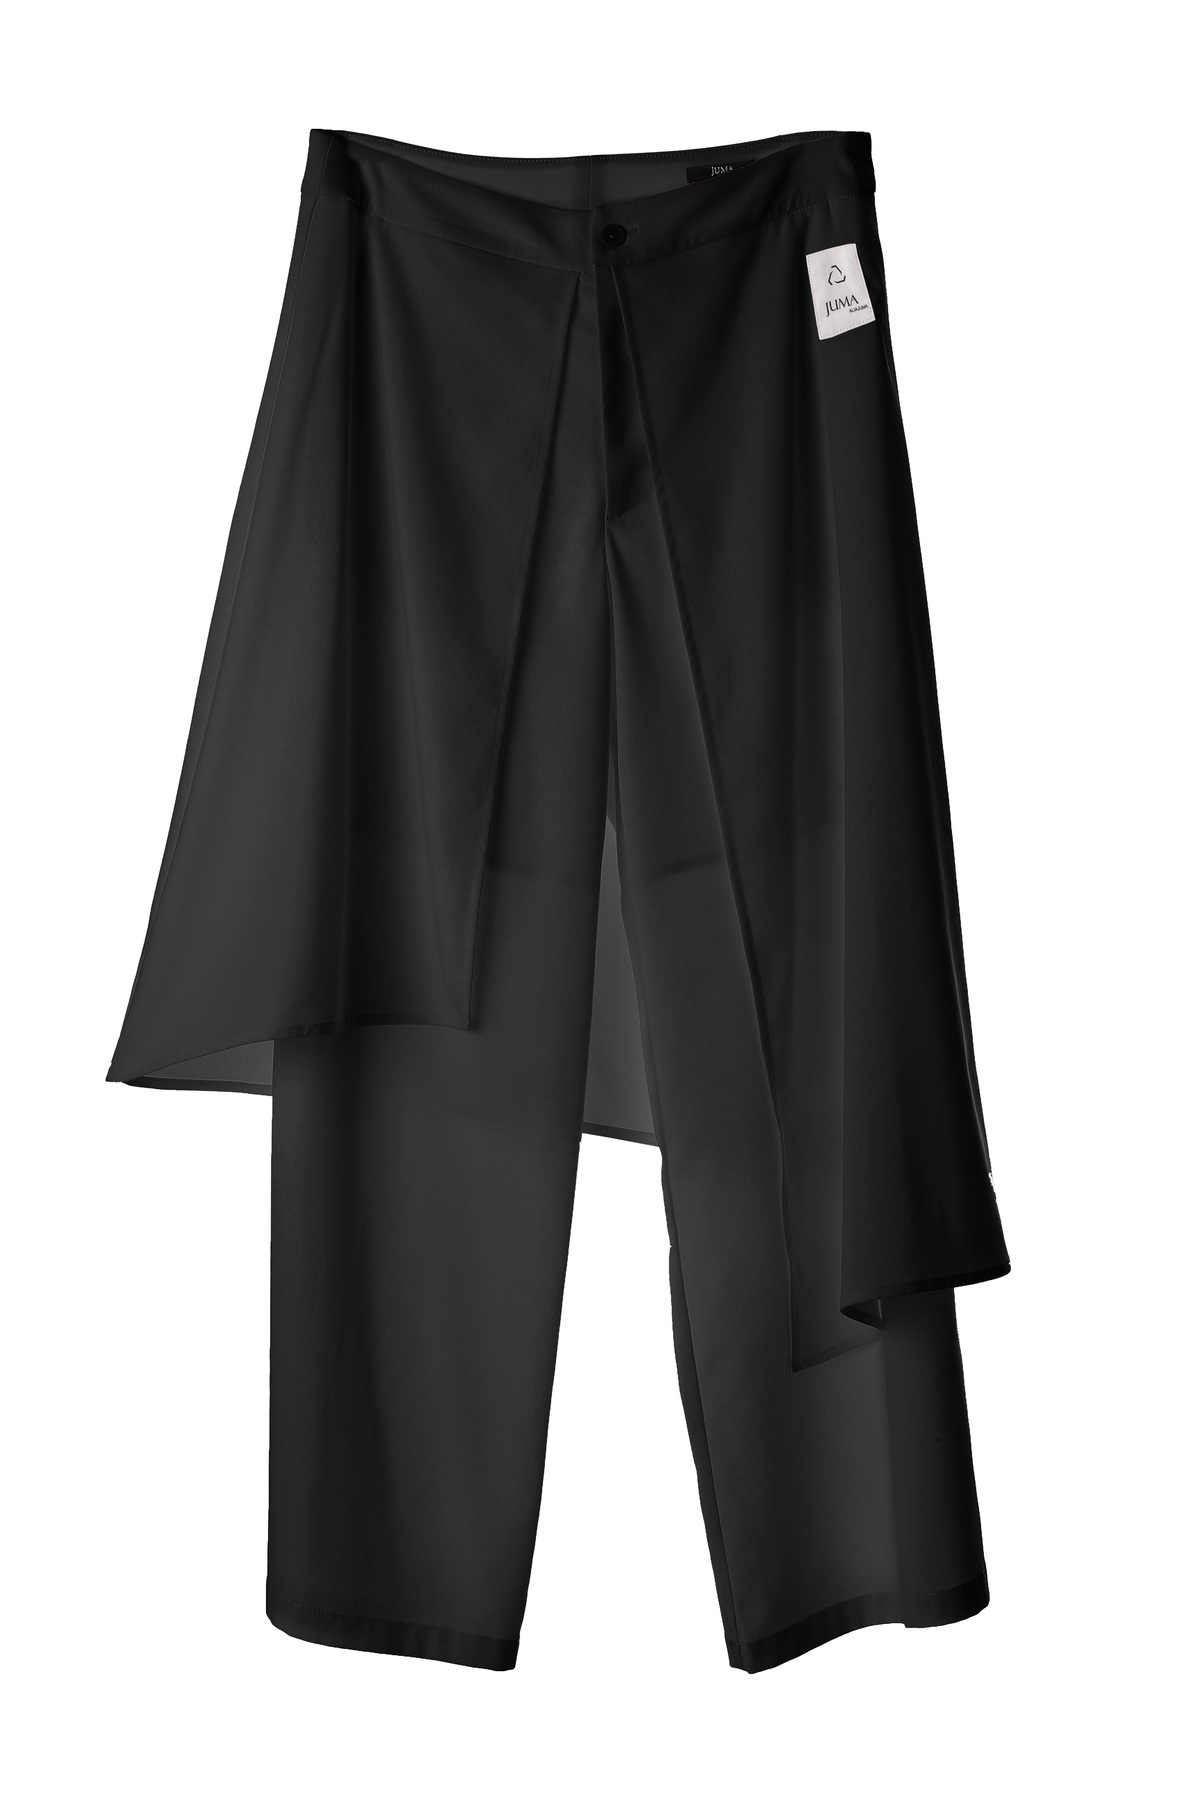 Alpertalisman 侧裙 - 12 个再生水瓶 - 黑色｜Alpertalisman Side Skirt - 12 Recycled Water Bottles - Black